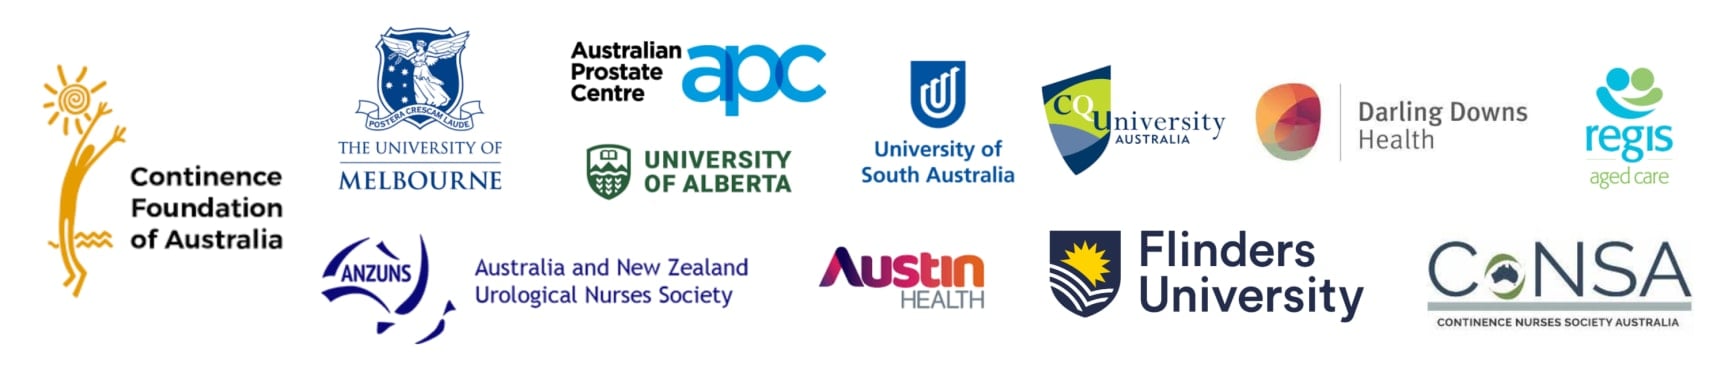 Logos of IDC-Improve collaborating organisations